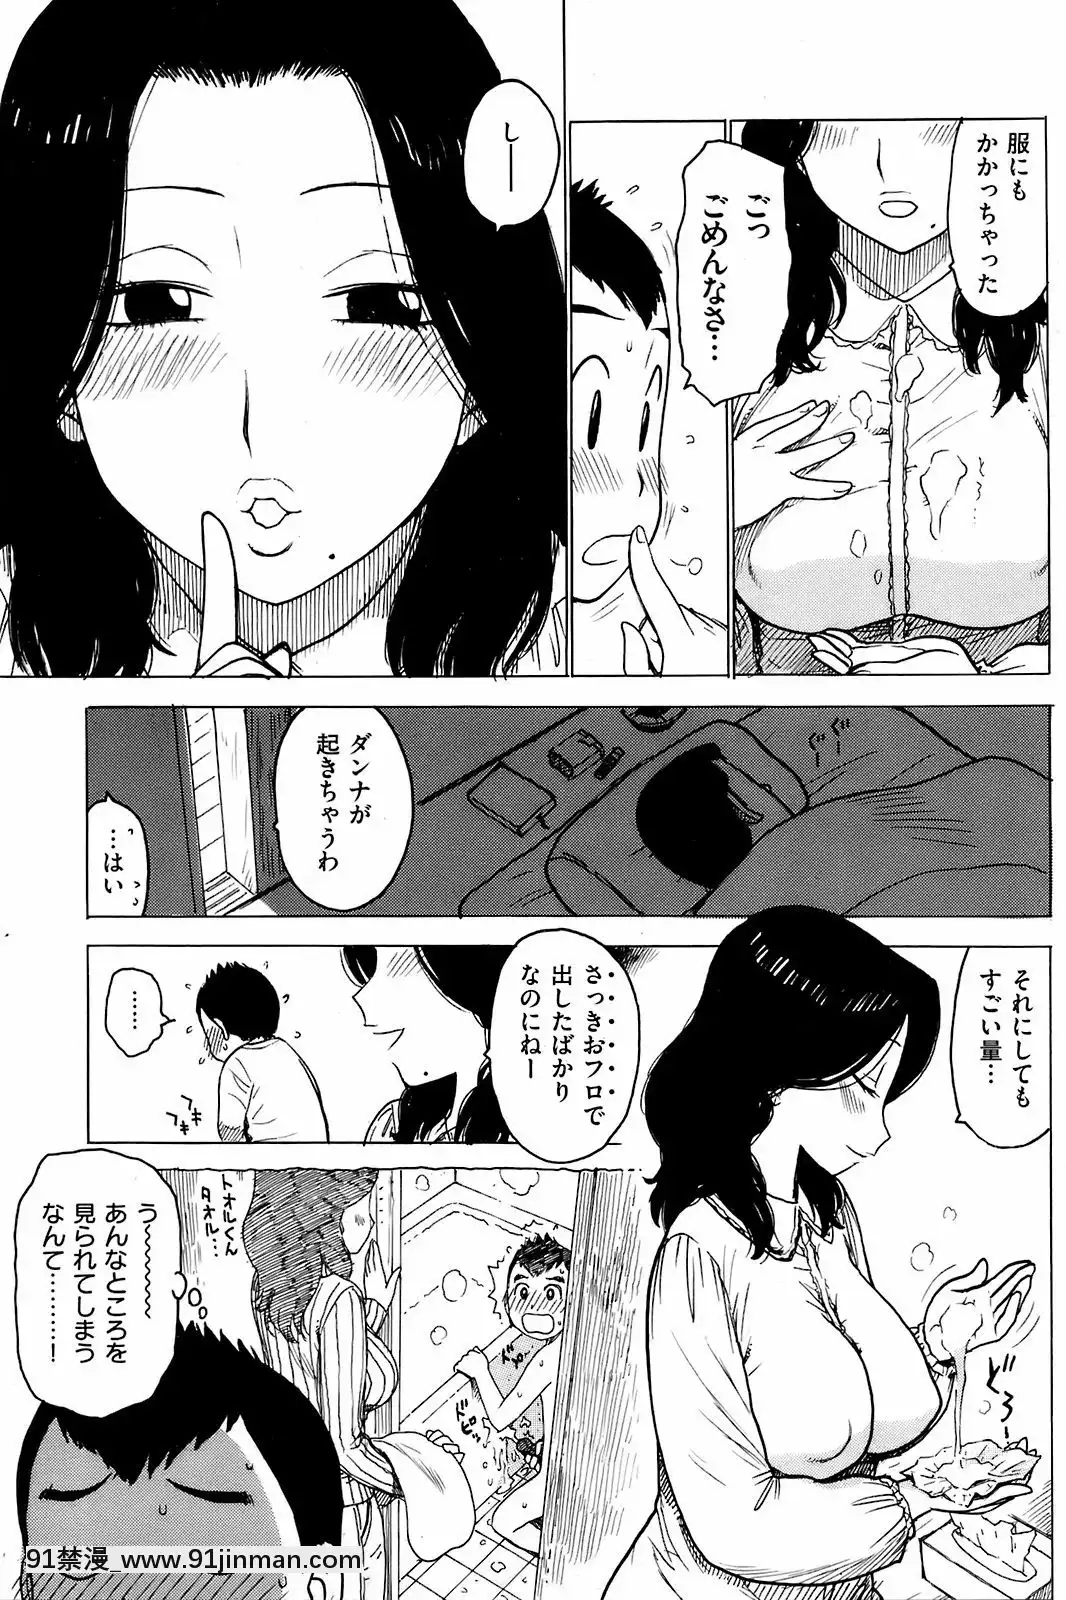 (Adult コミック) [雑志] COMIC Kuai La Tian số tháng 3 năm 2008【conan truyện tranh chap 1022】